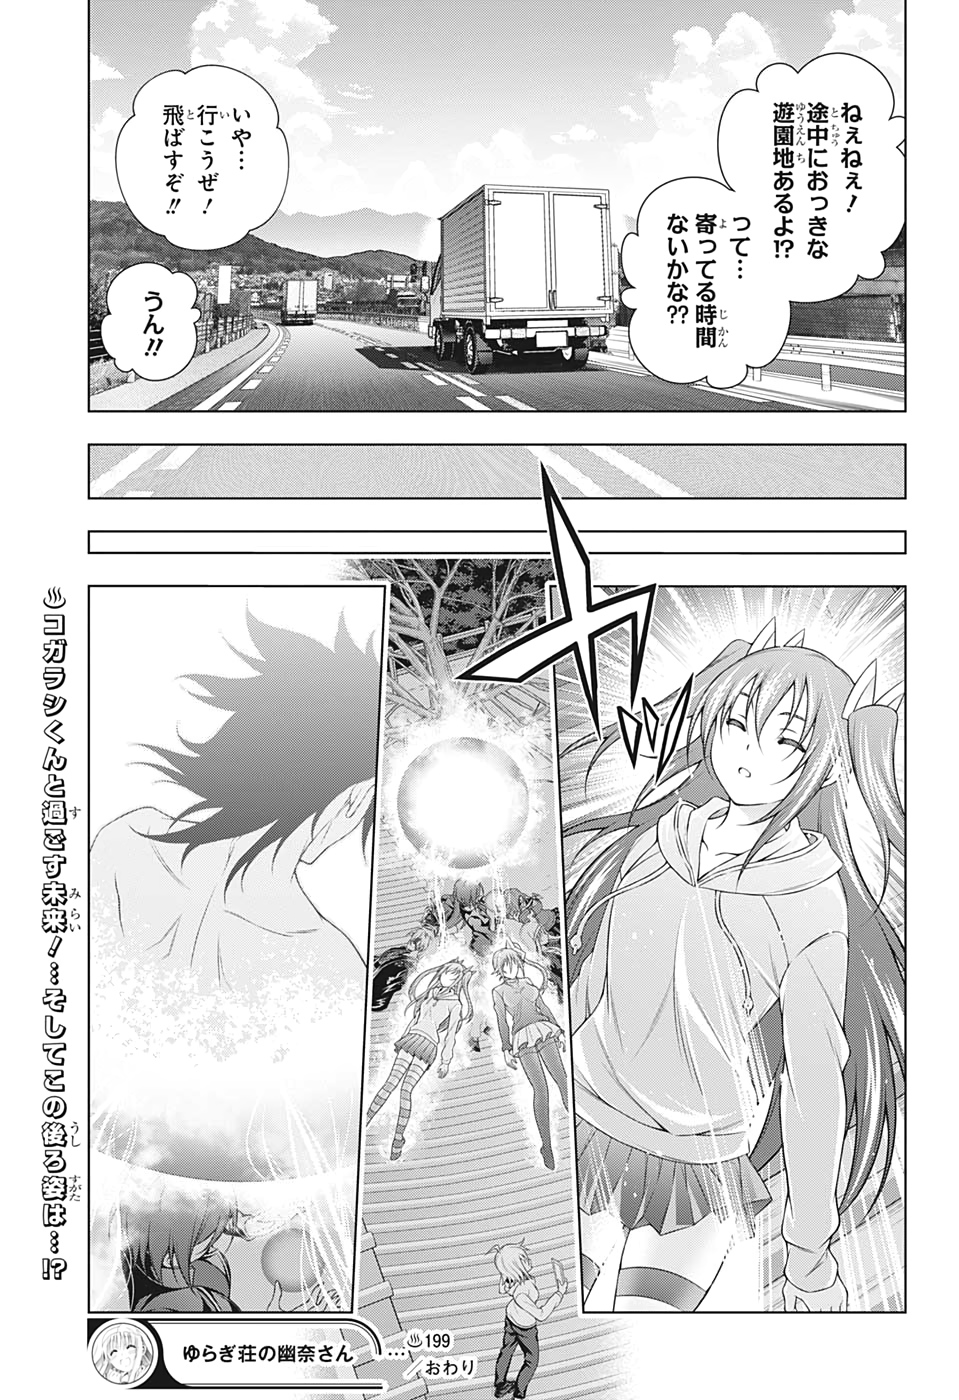 Yuragi-sou no Yuuna-san - ゆらぎ荘の幽奈さん - Chapter 199 - Page 19